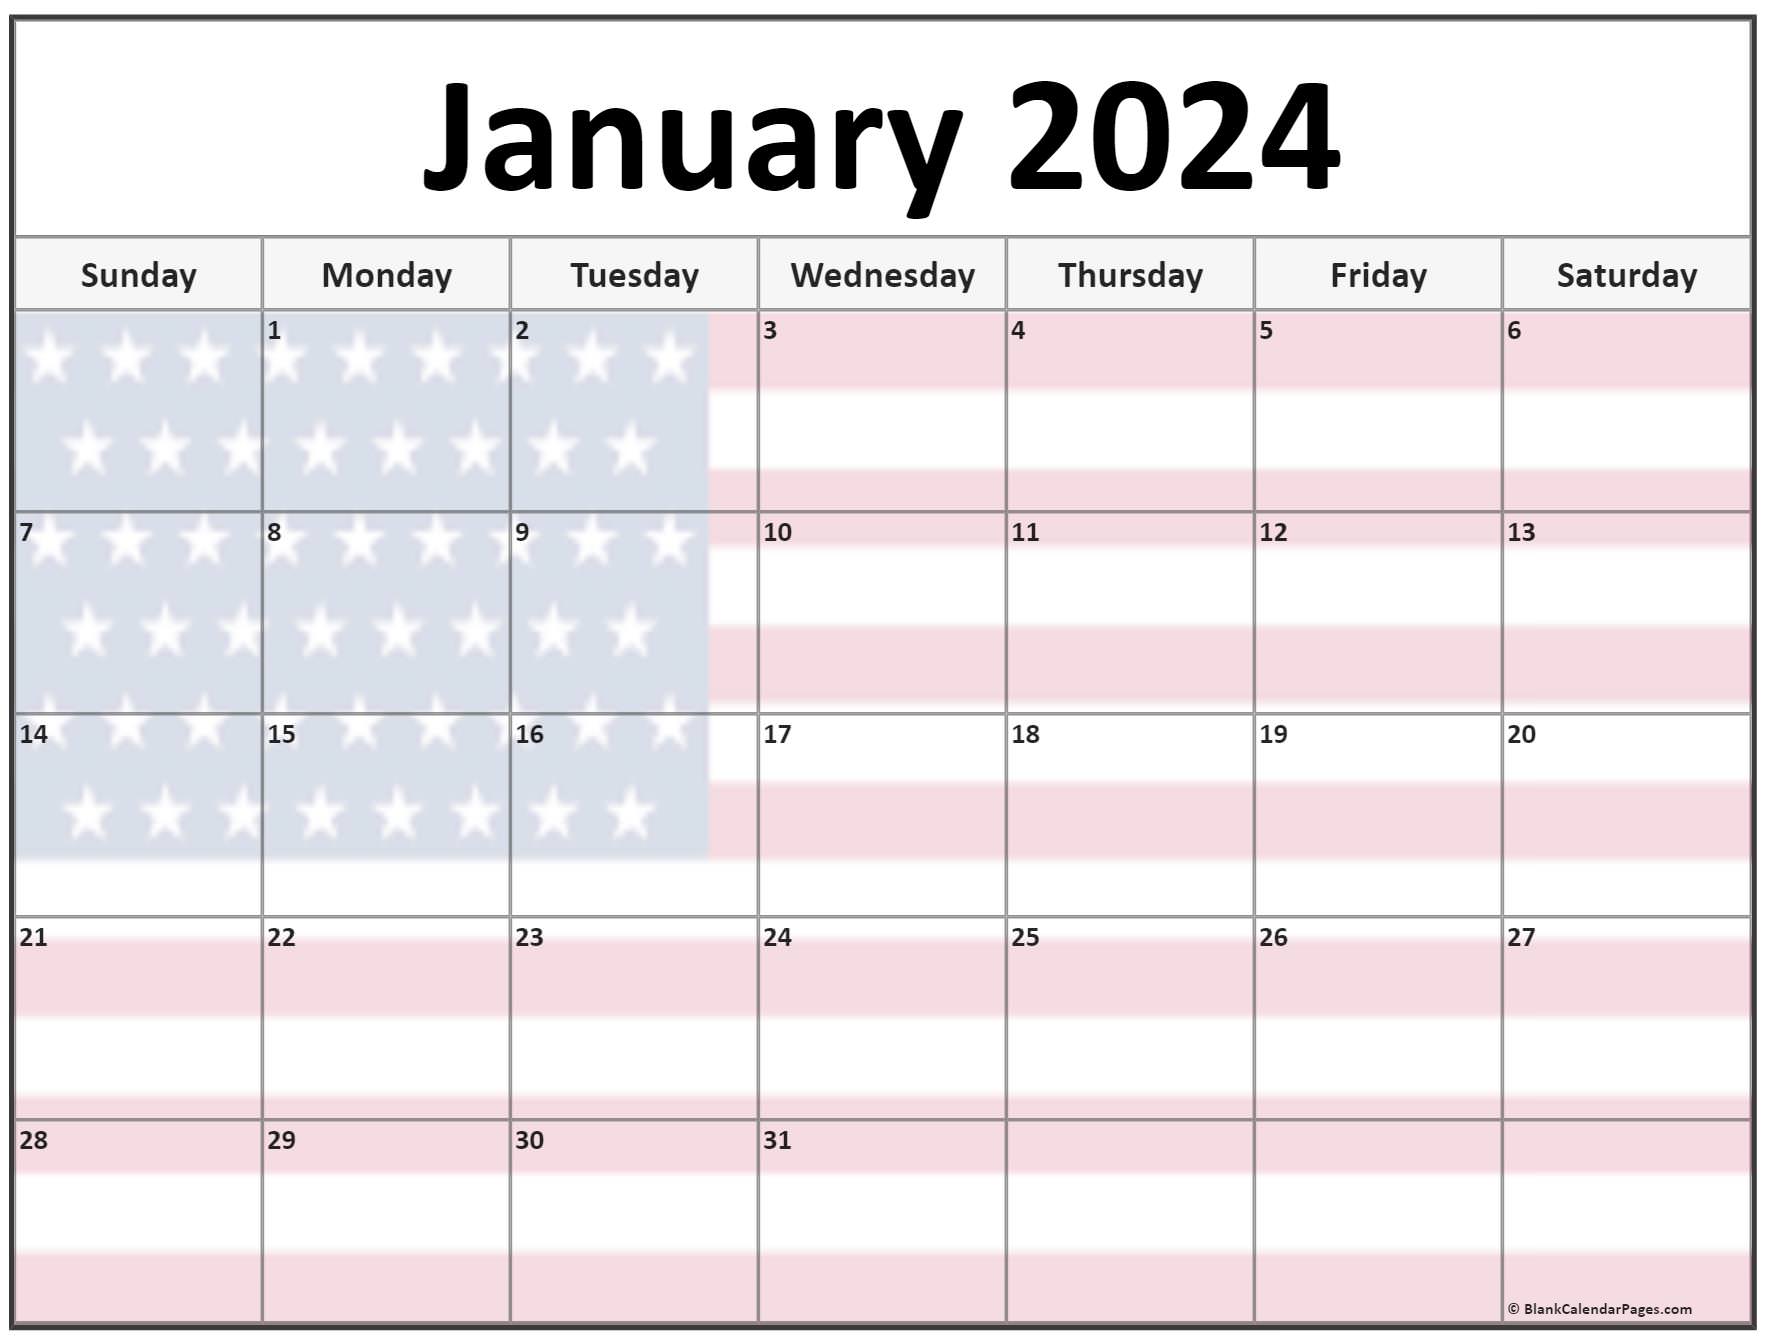 Google Calendar January 2024 Top The Best Famous January 2024 